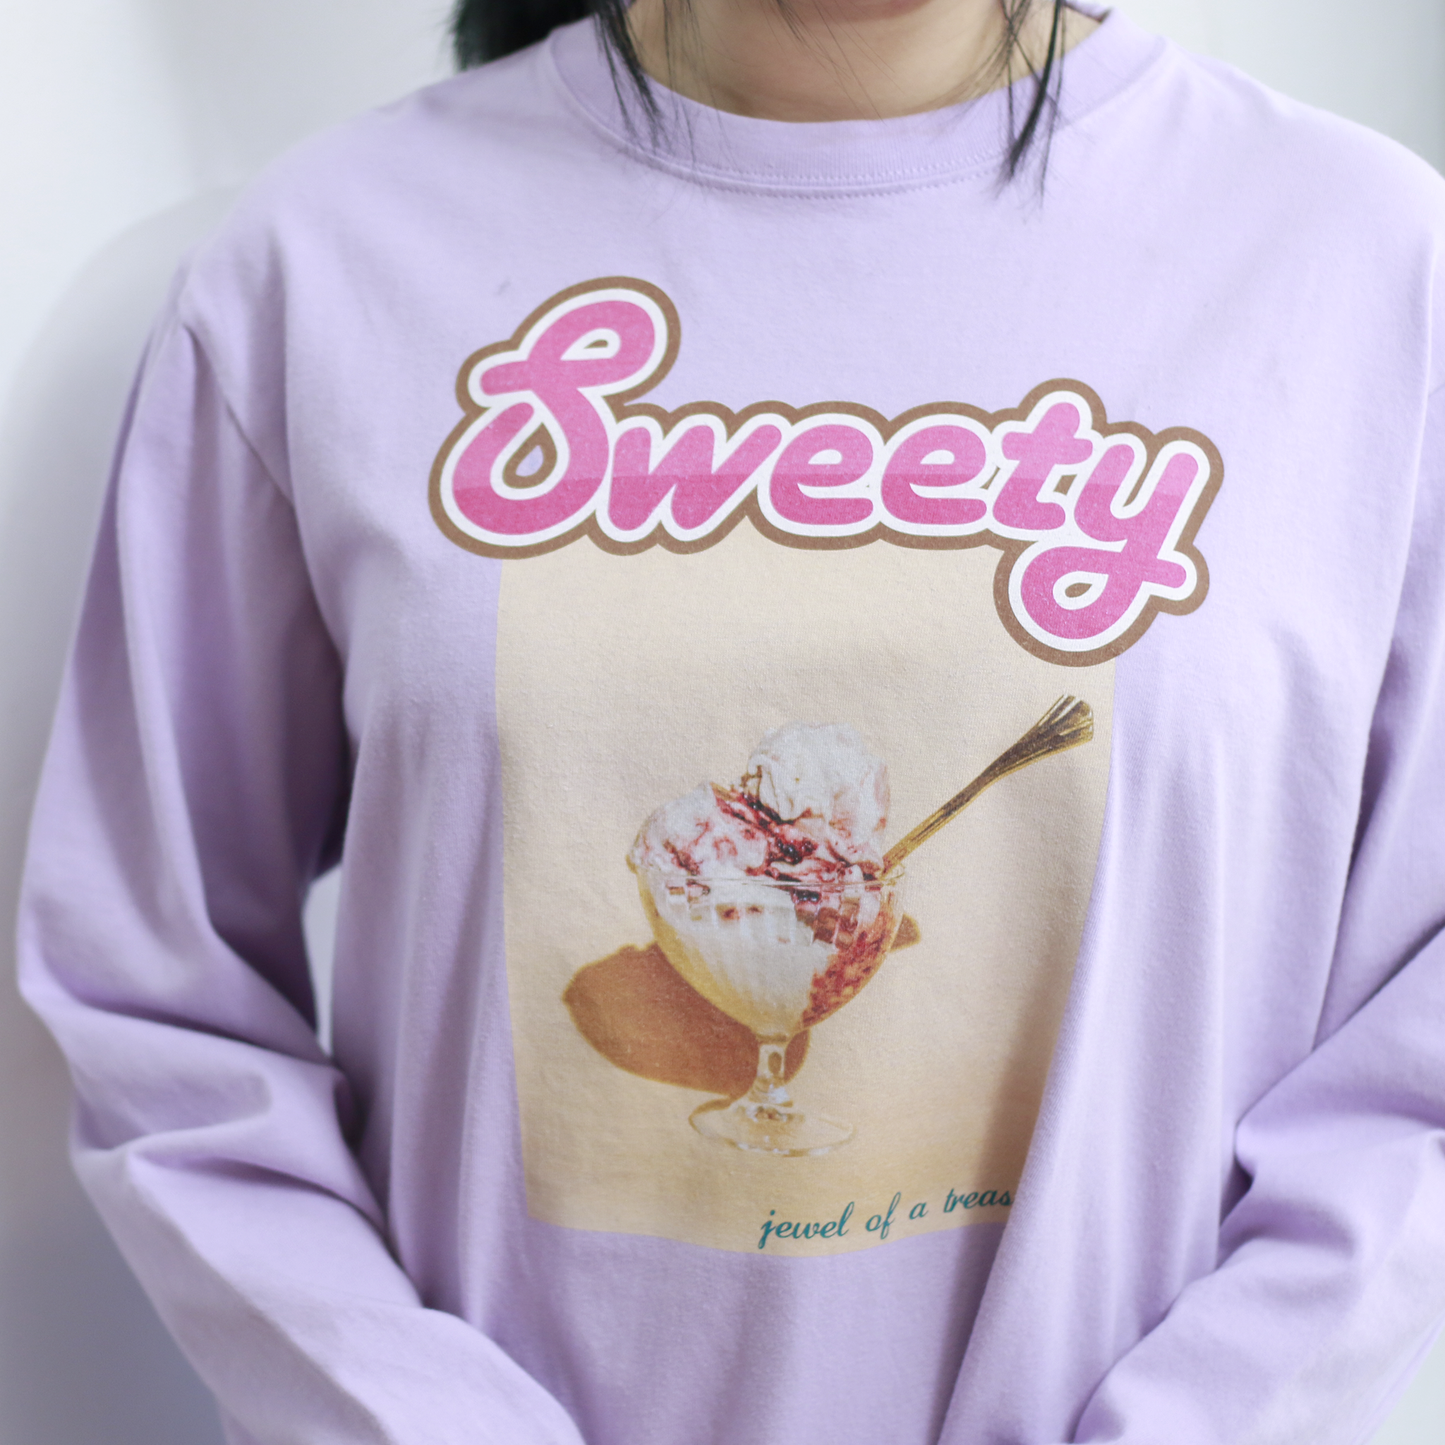 Sweety / FSW-004 / アイスクリーム ロングスリーブTシャツ【受注生産】